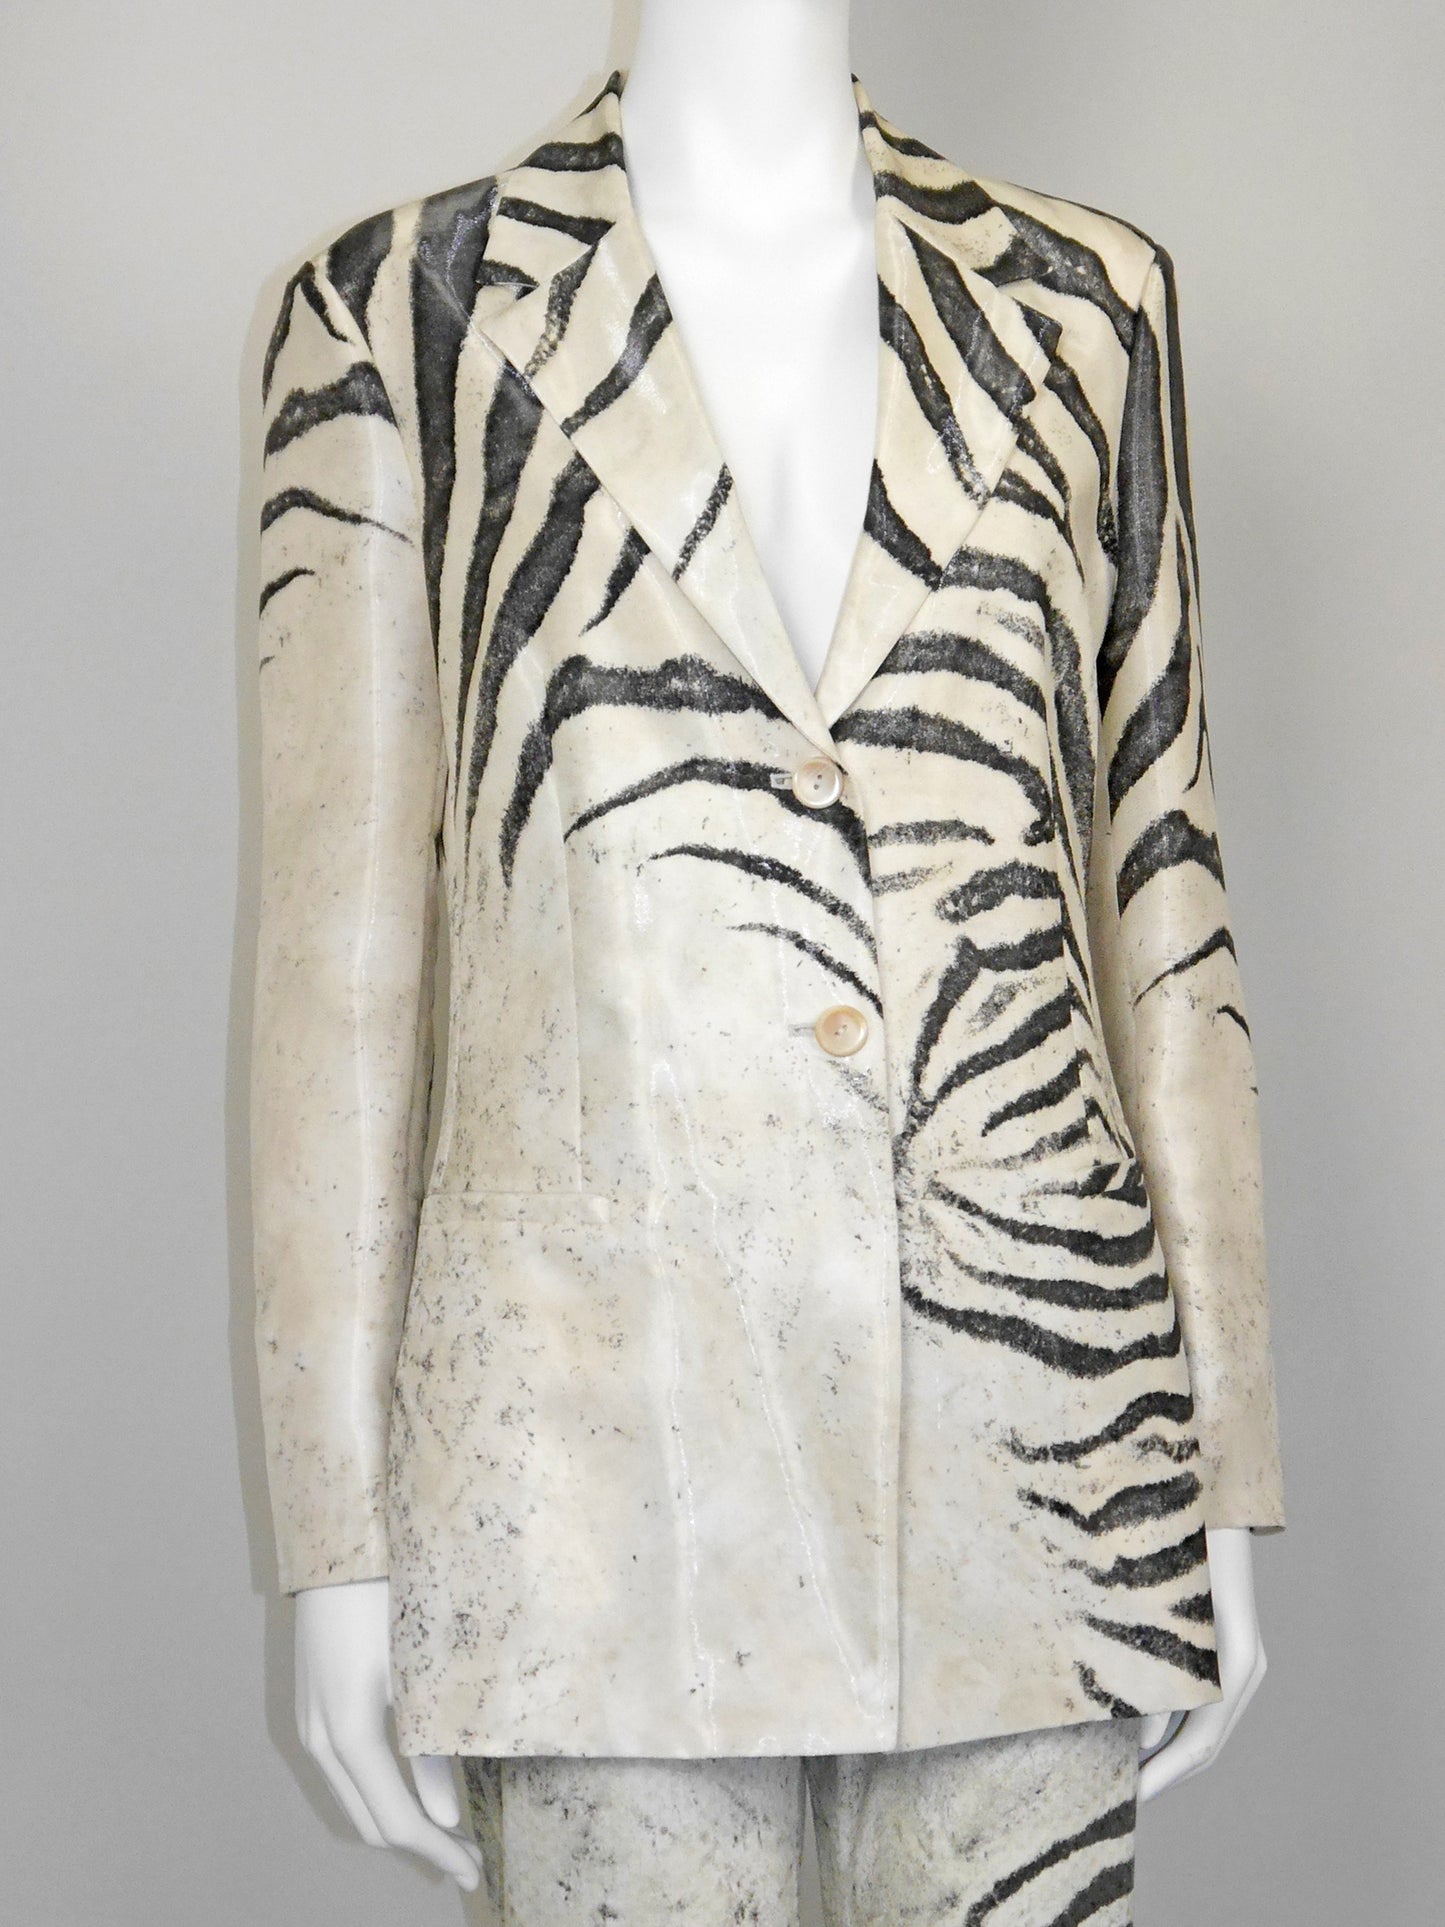 ROBERTO CAVALLI Spring 1999 Vintage Zebra Print Silk Jacket & Denim Pants Suit Size M